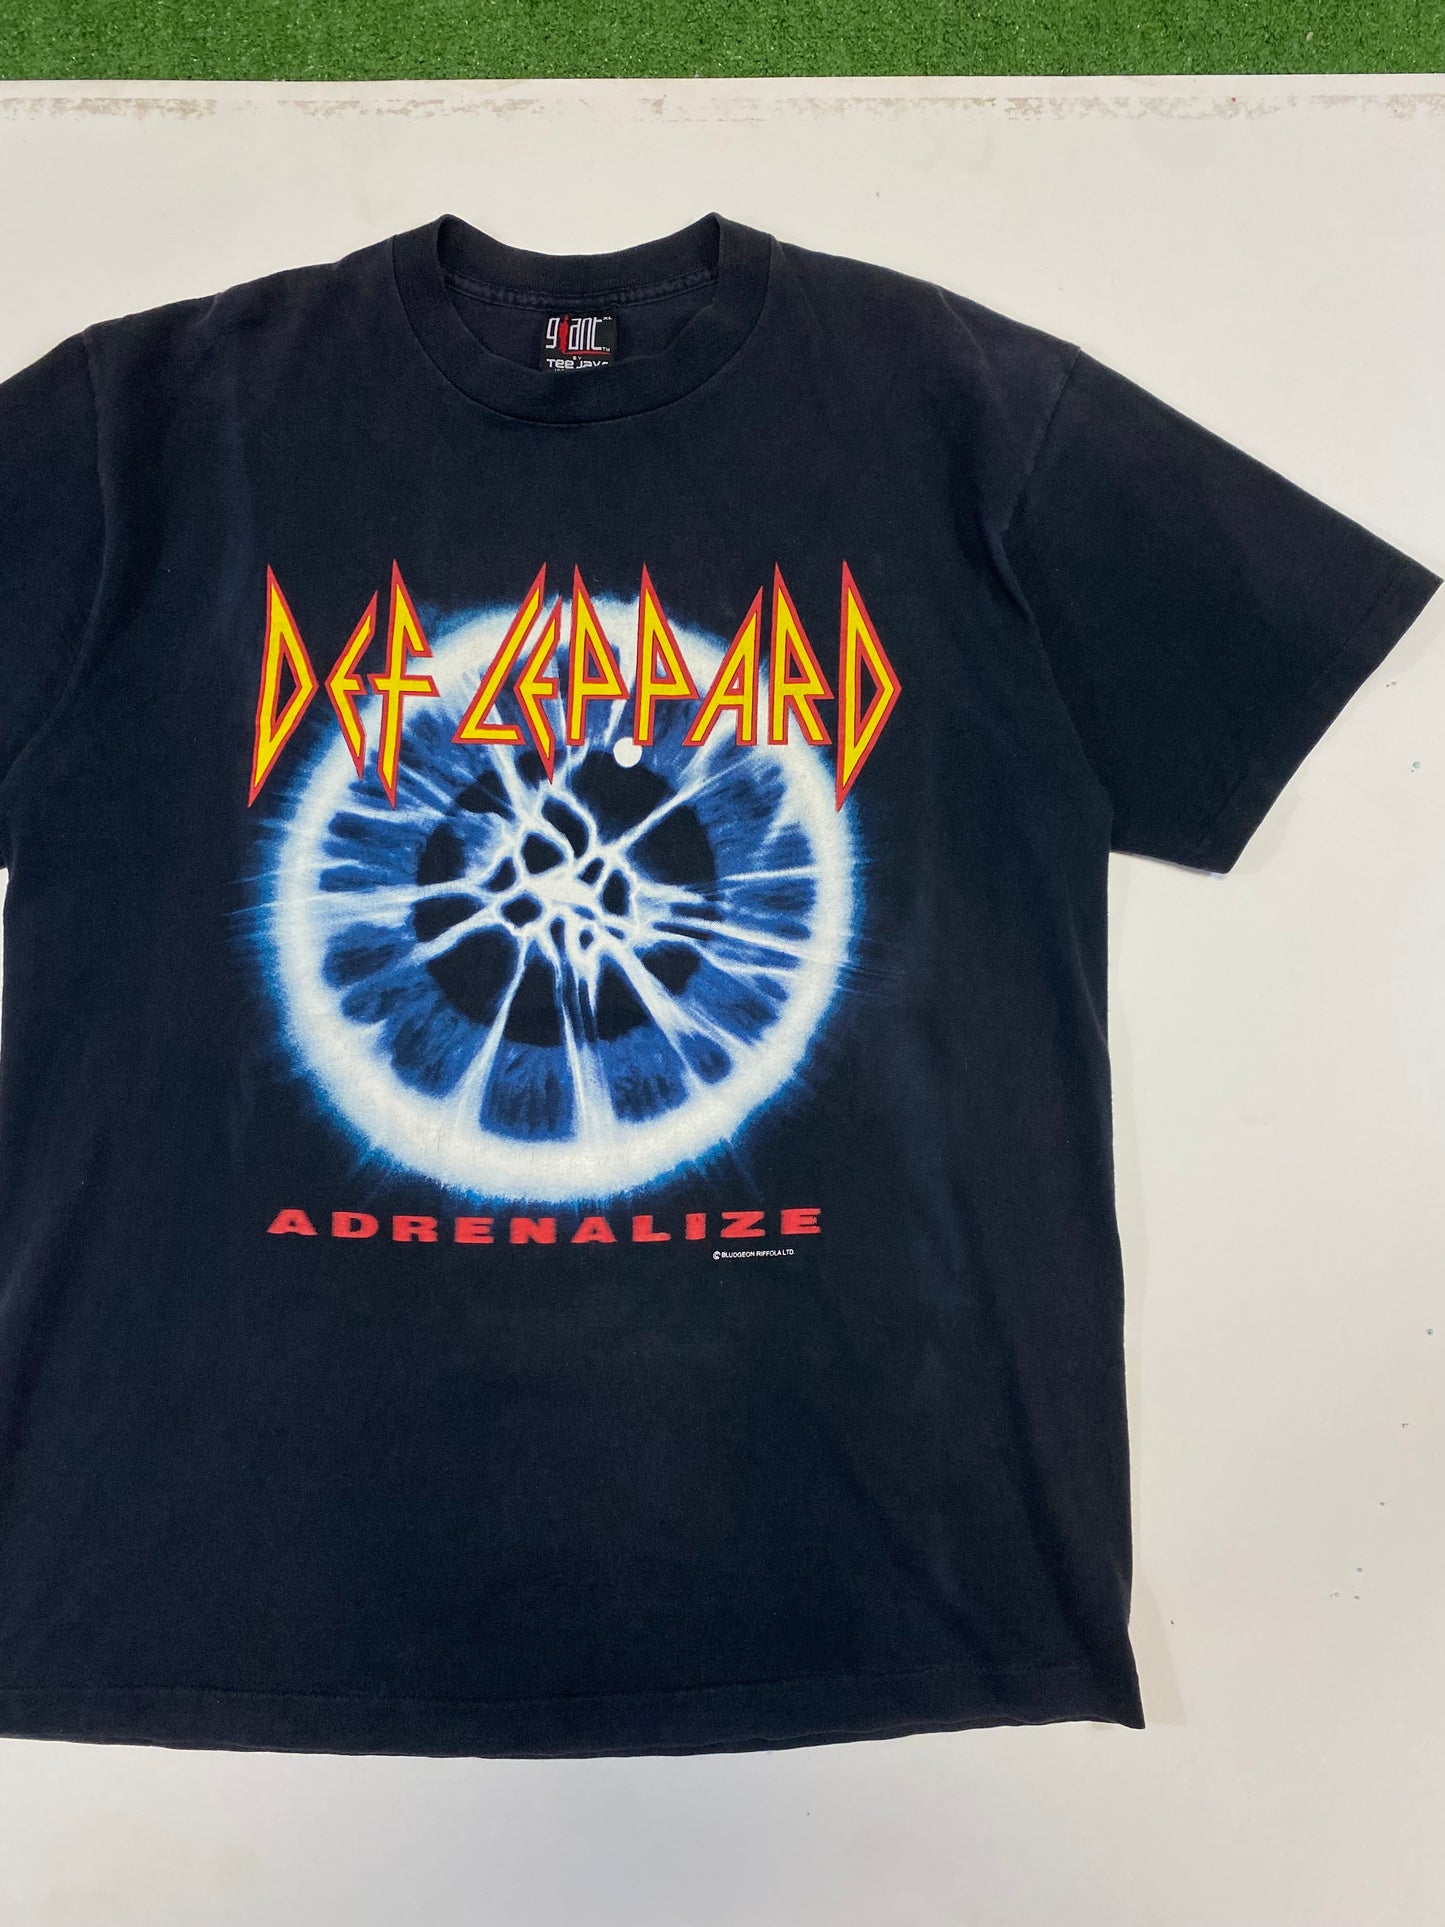 1993 Def Leppard Adrenalize 7 Day Tour T-Shirt XL